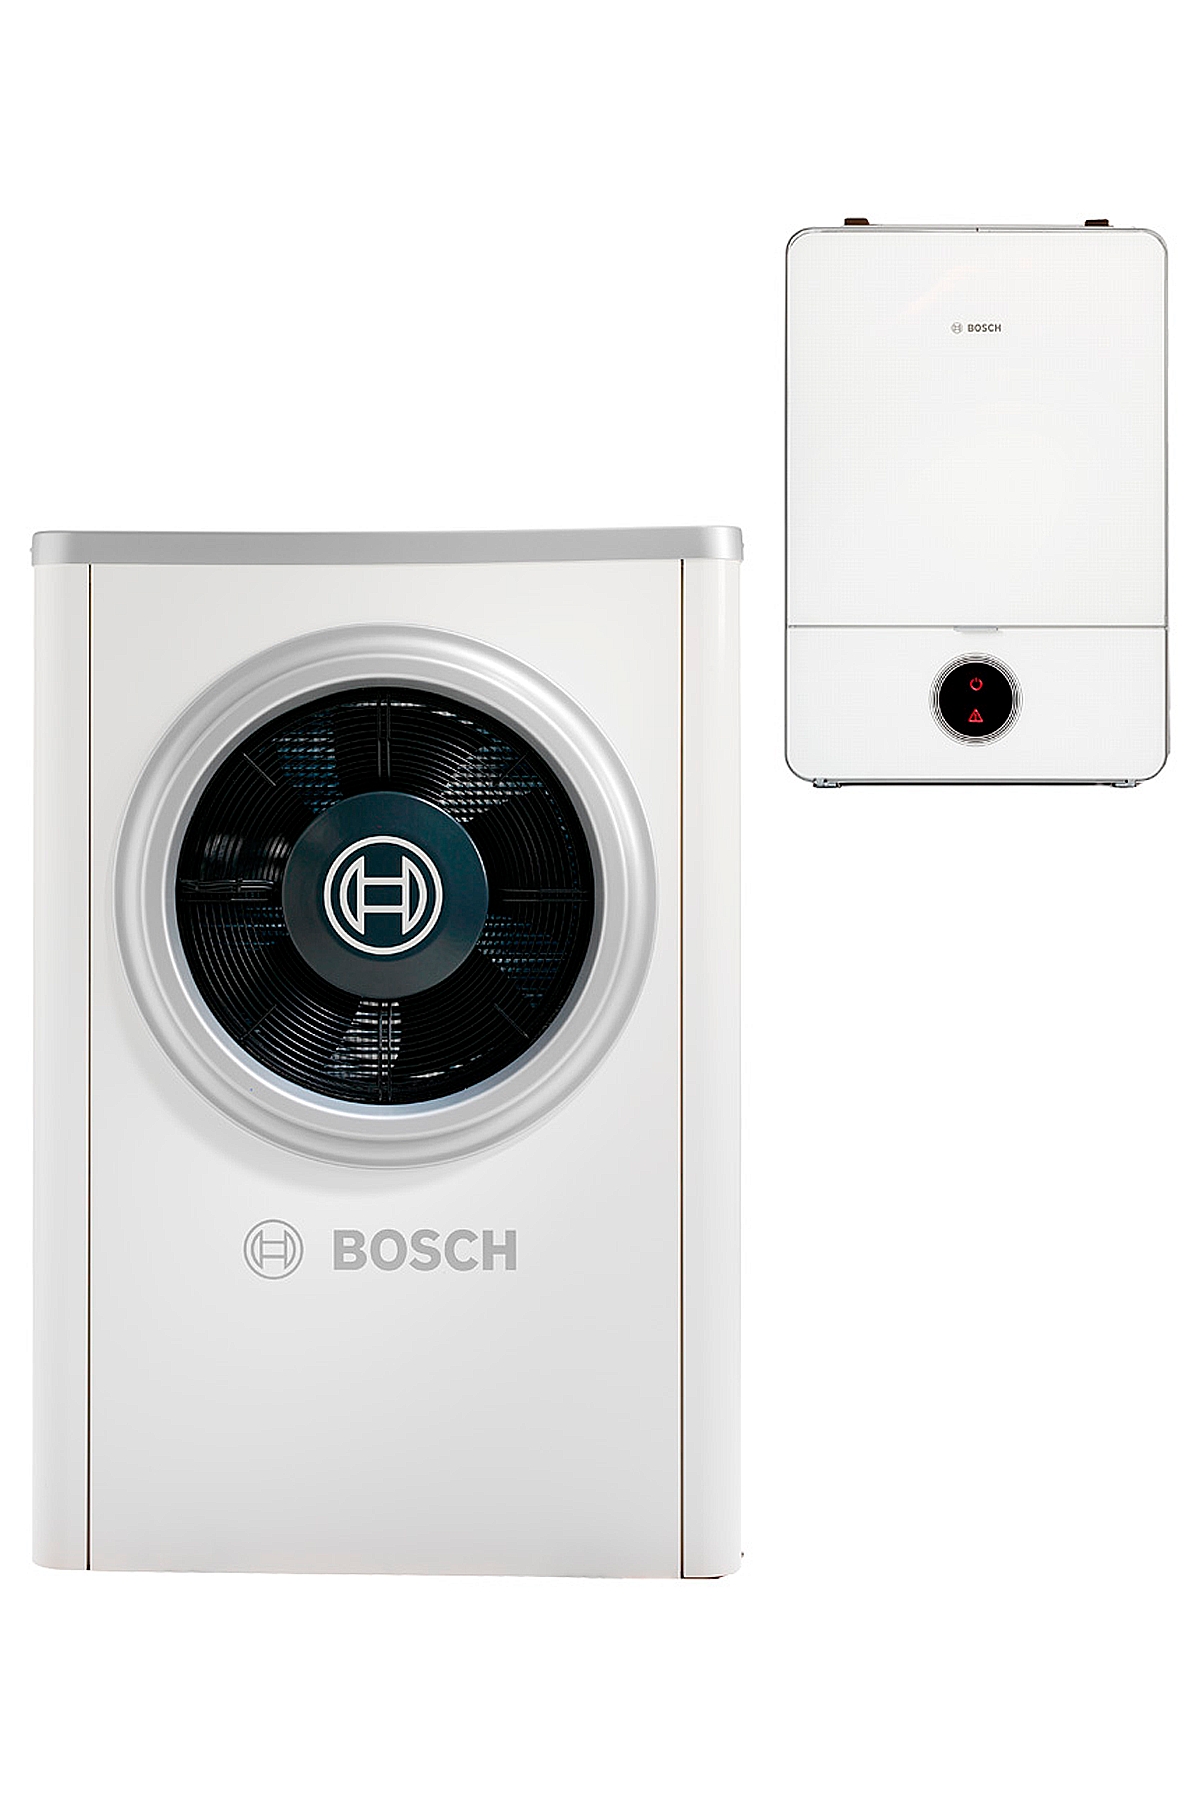 Bosch Compress 7000i AW 17 B